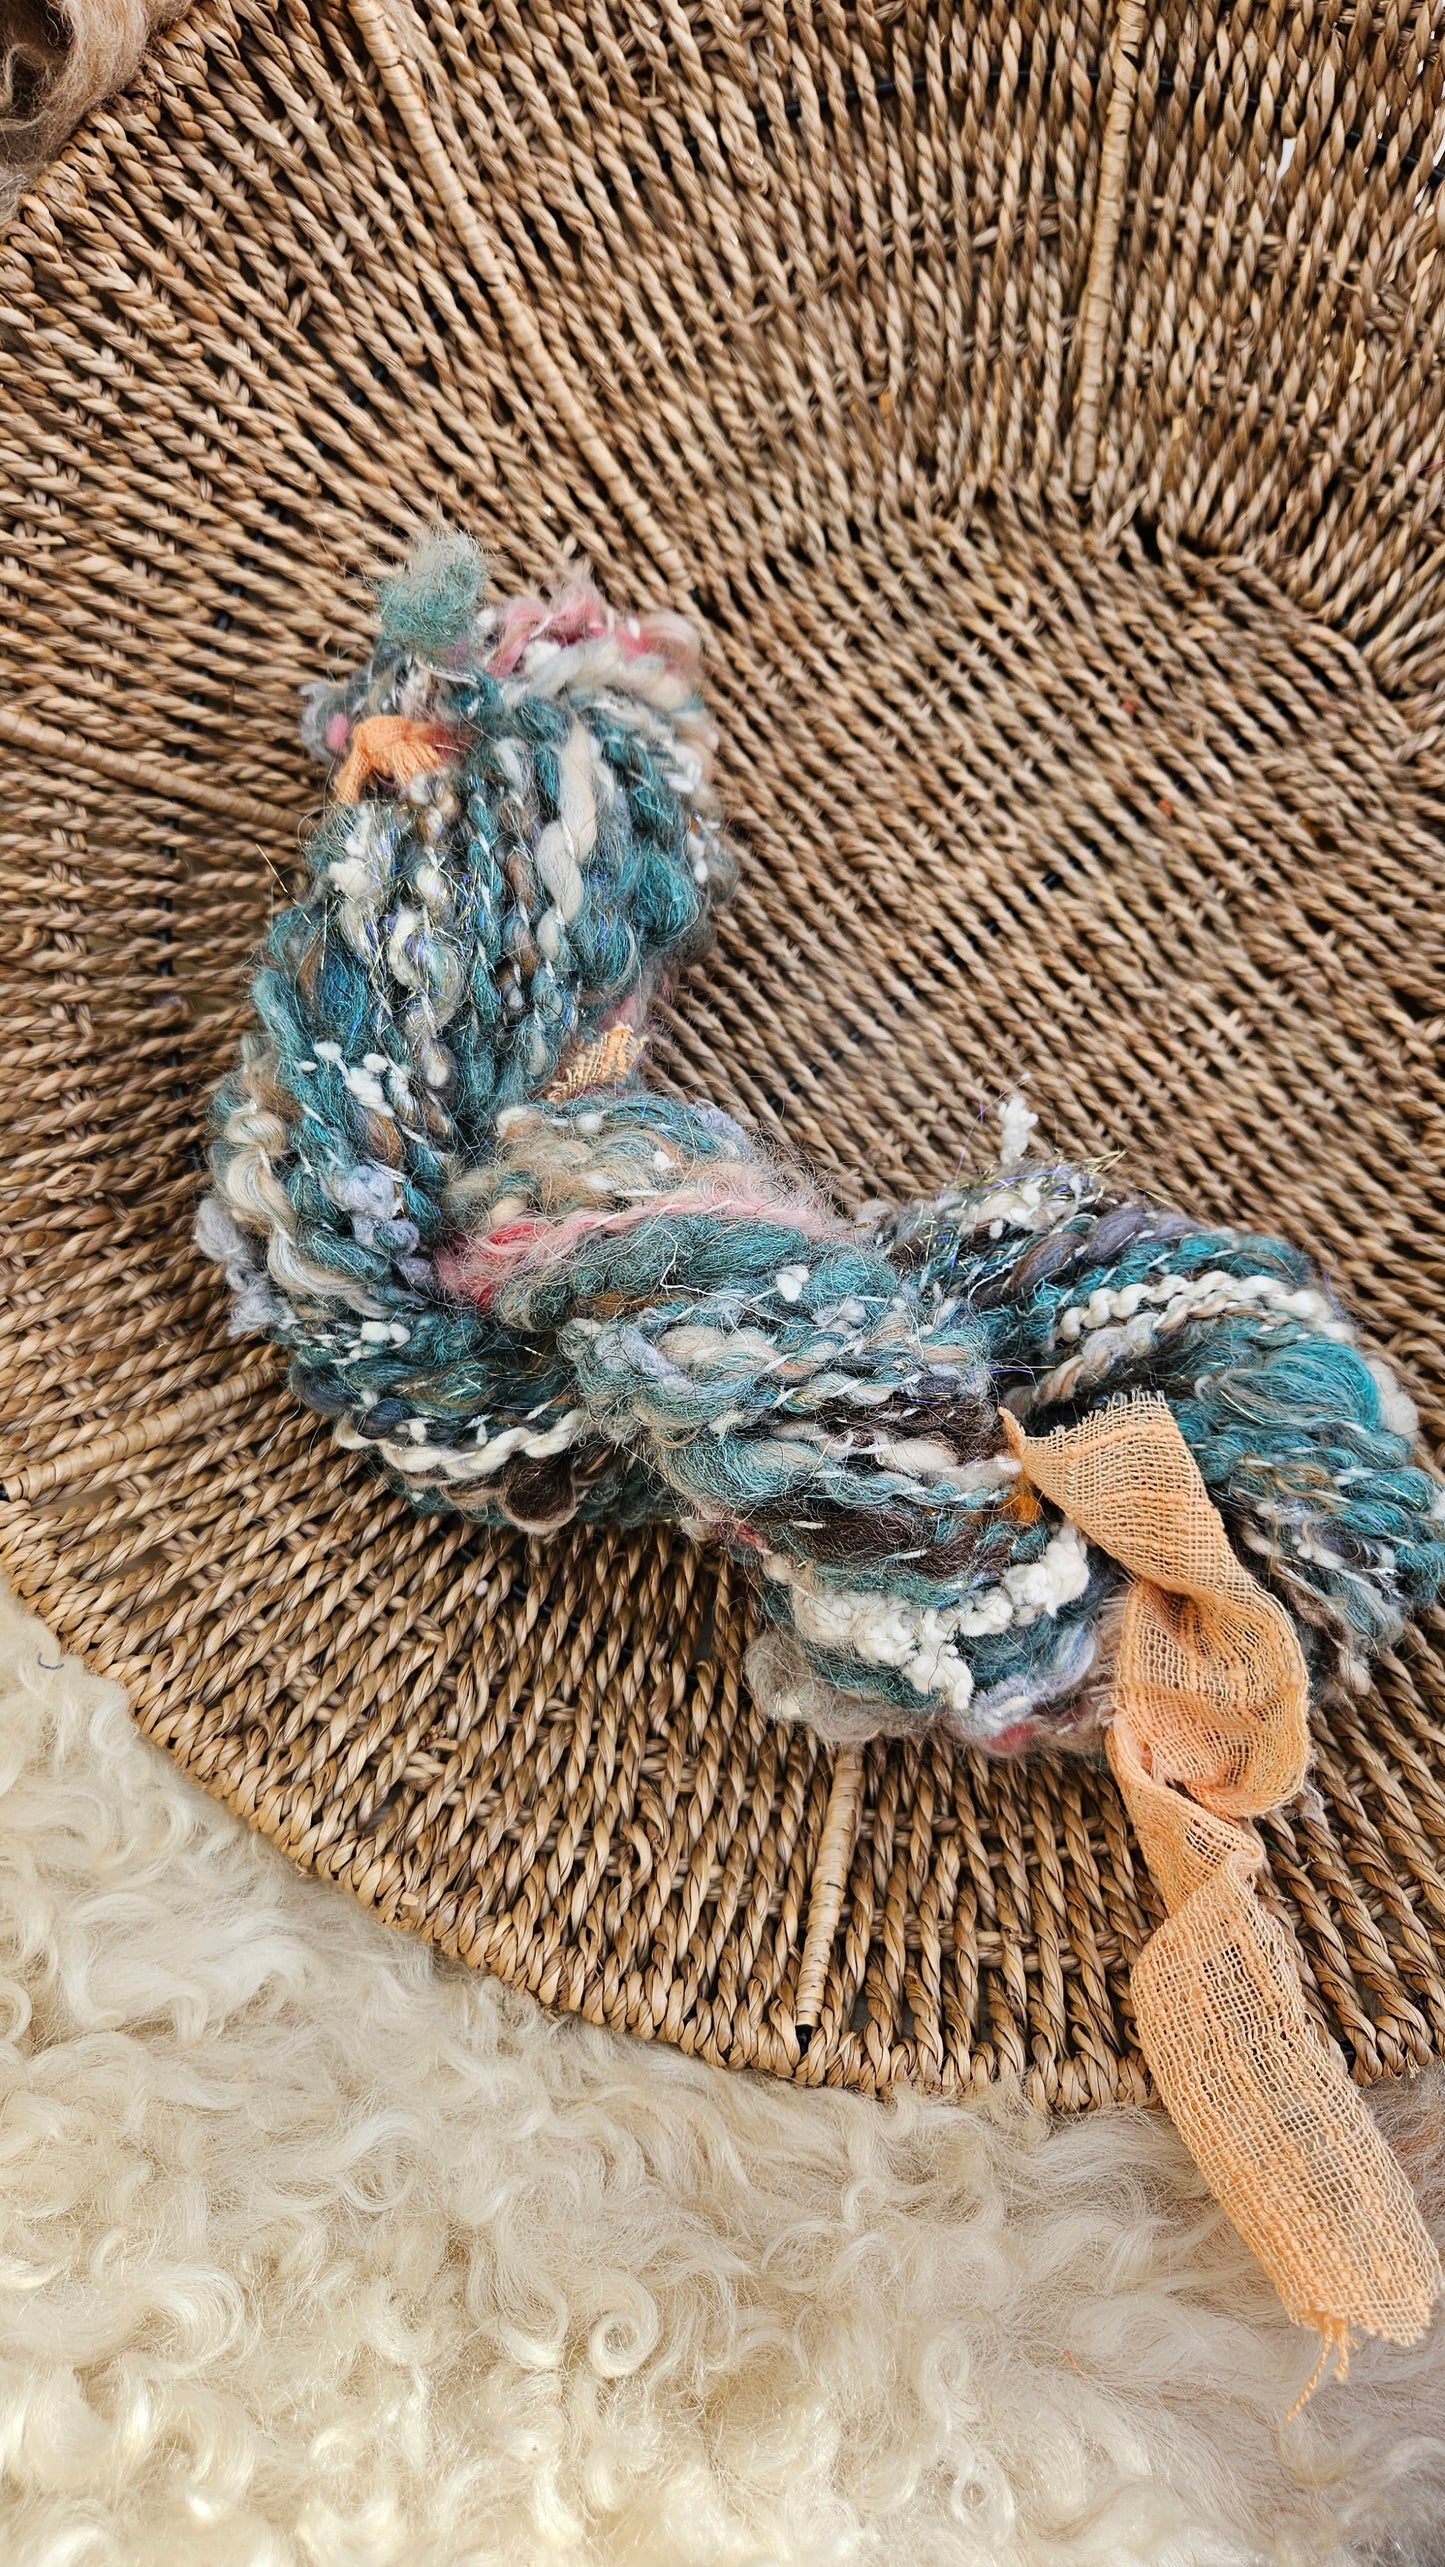 OLD MANSION DRAPERY - Handspun Bulky Wool Textured Art Yarn - 31 Yards 2.5 oz